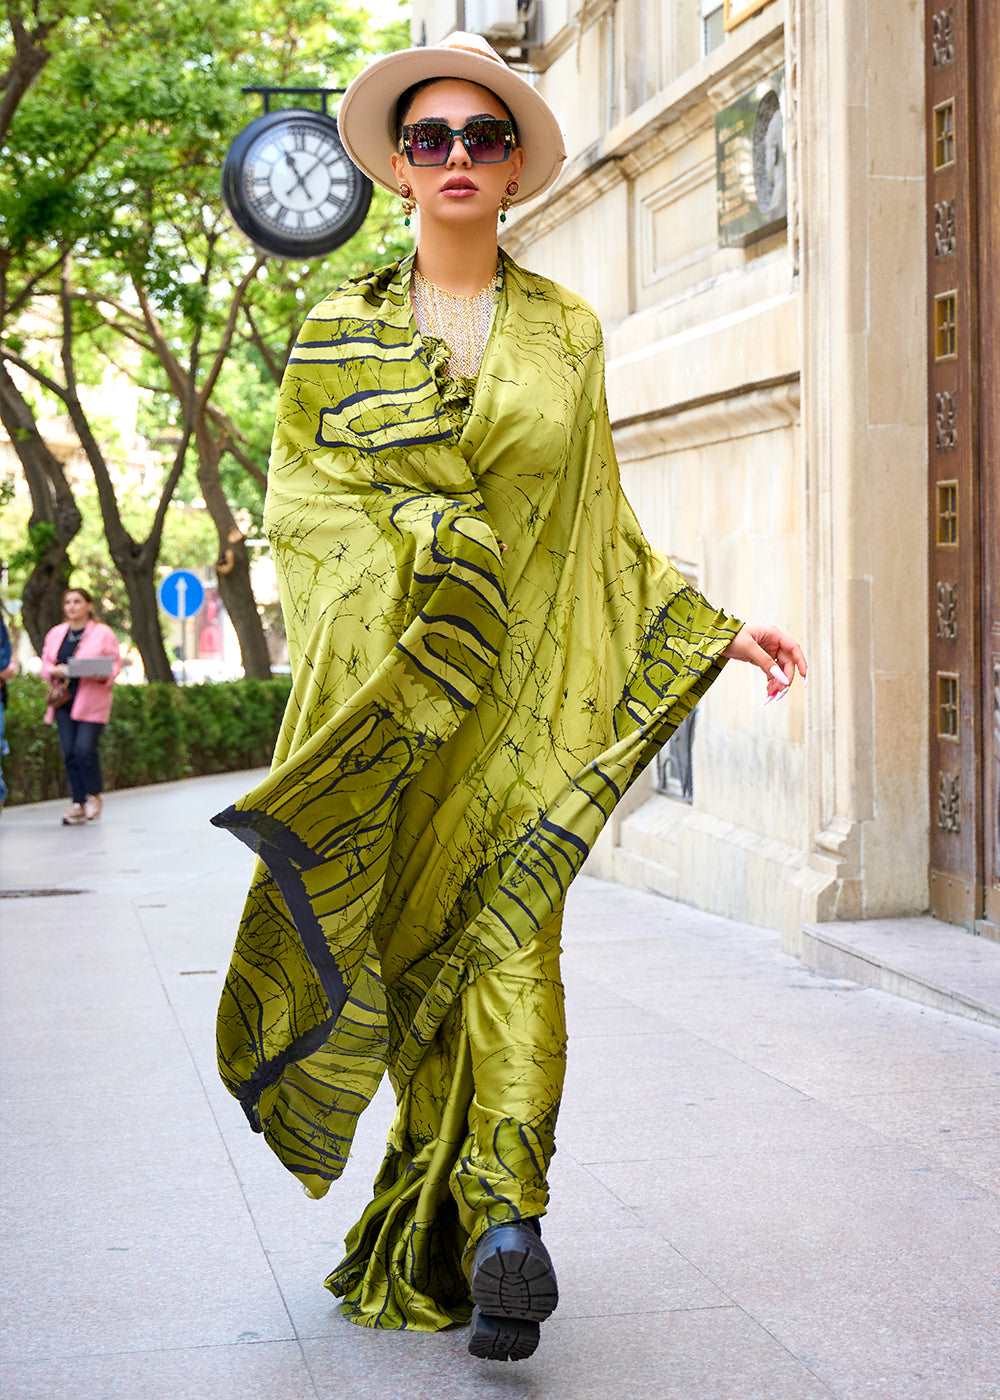 Avocado Green Designer Satin Crepe Printed Saree - Colorful Saree